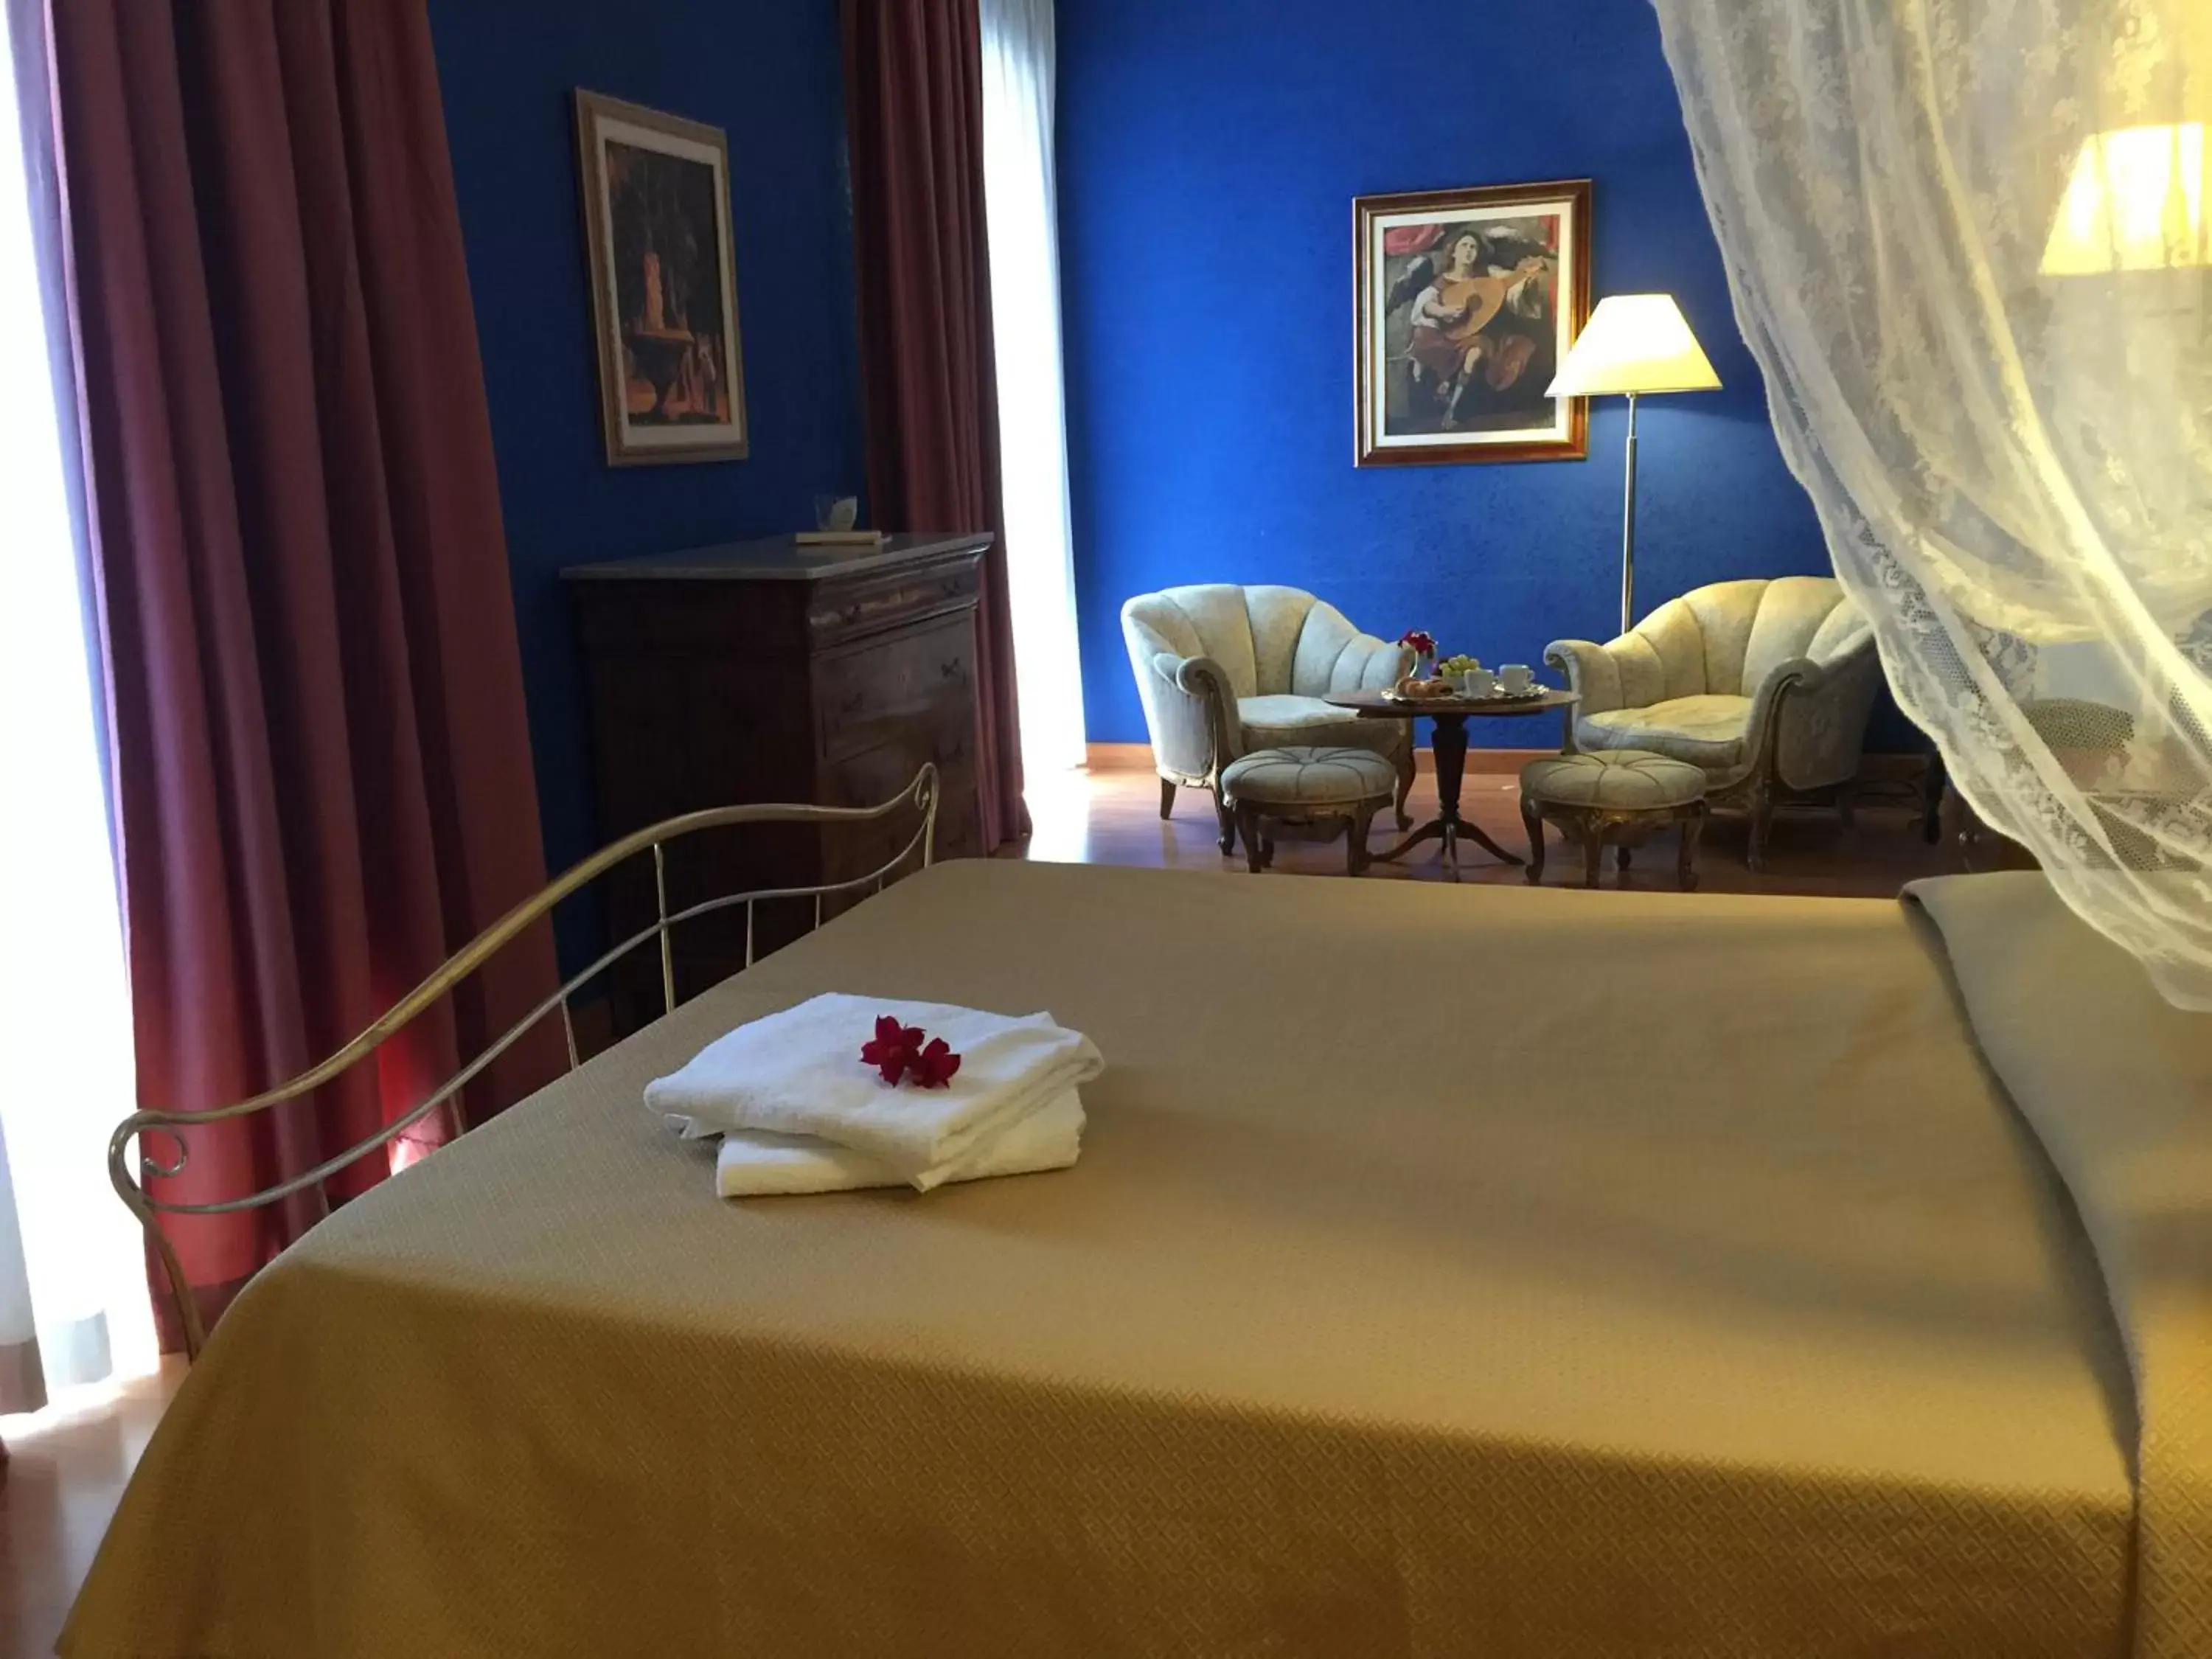 Bed, Room Photo in Hotel Relais Filonardi